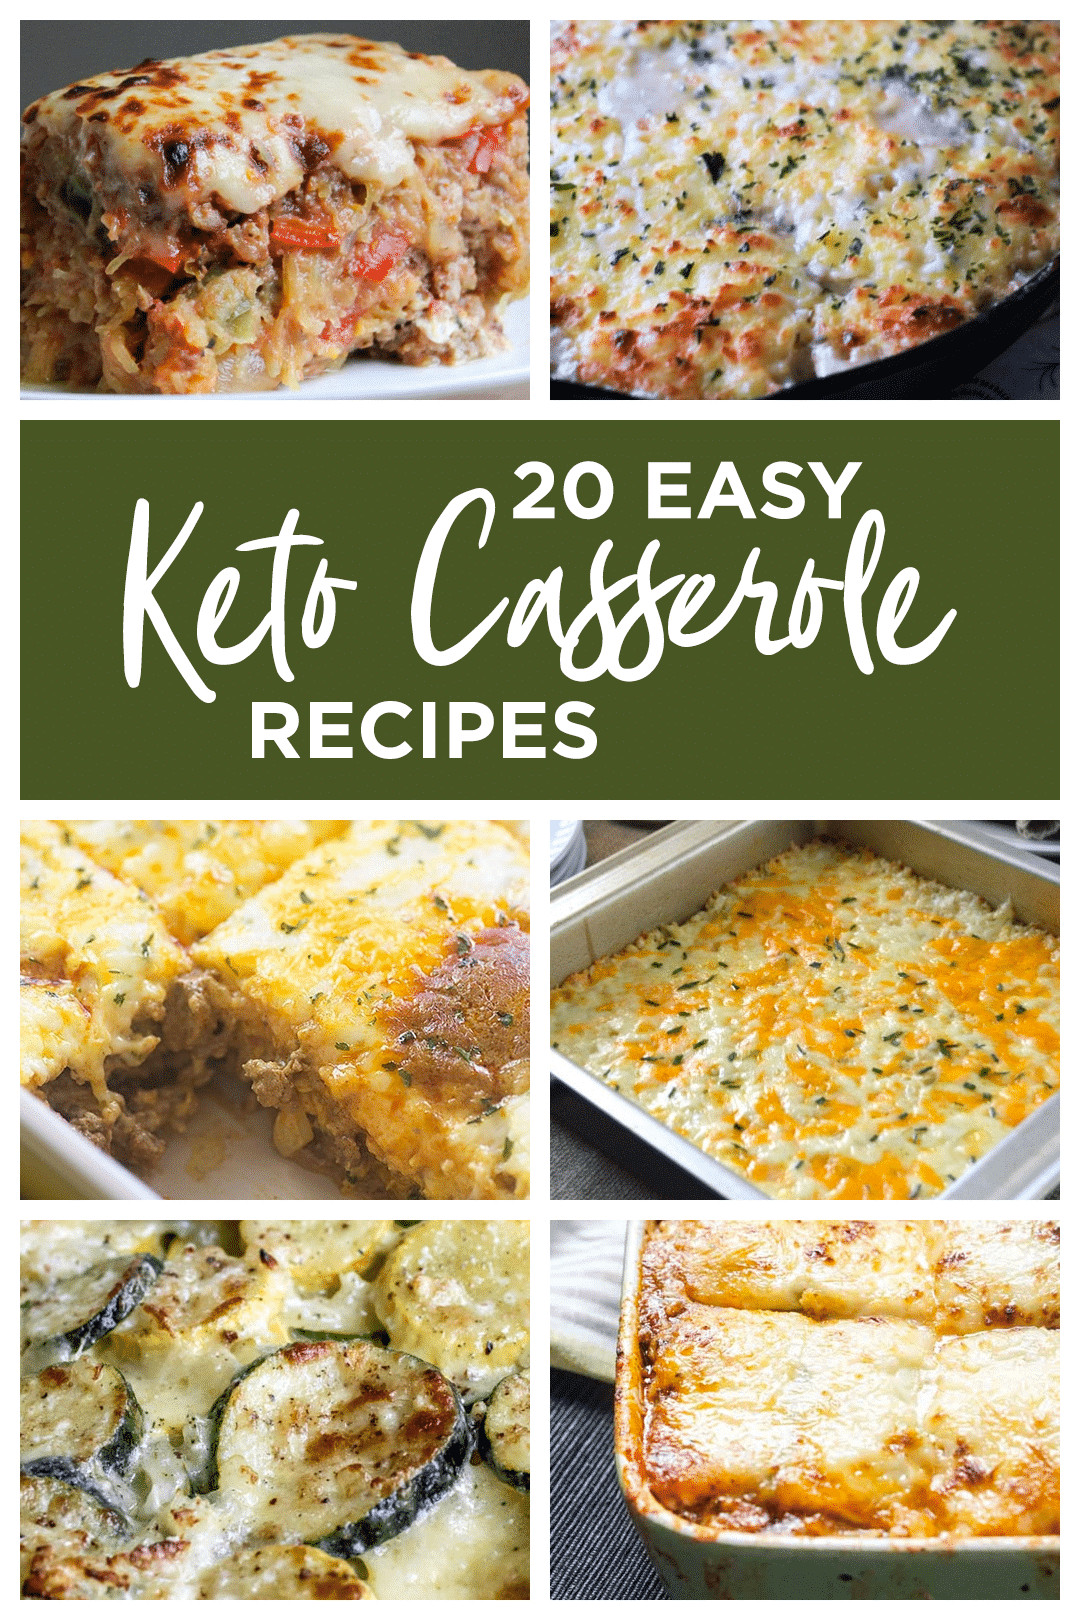 Keto Casserole Recipes Easy Dinners
 20 Easy Keto Casserole Recipes low carb friendly